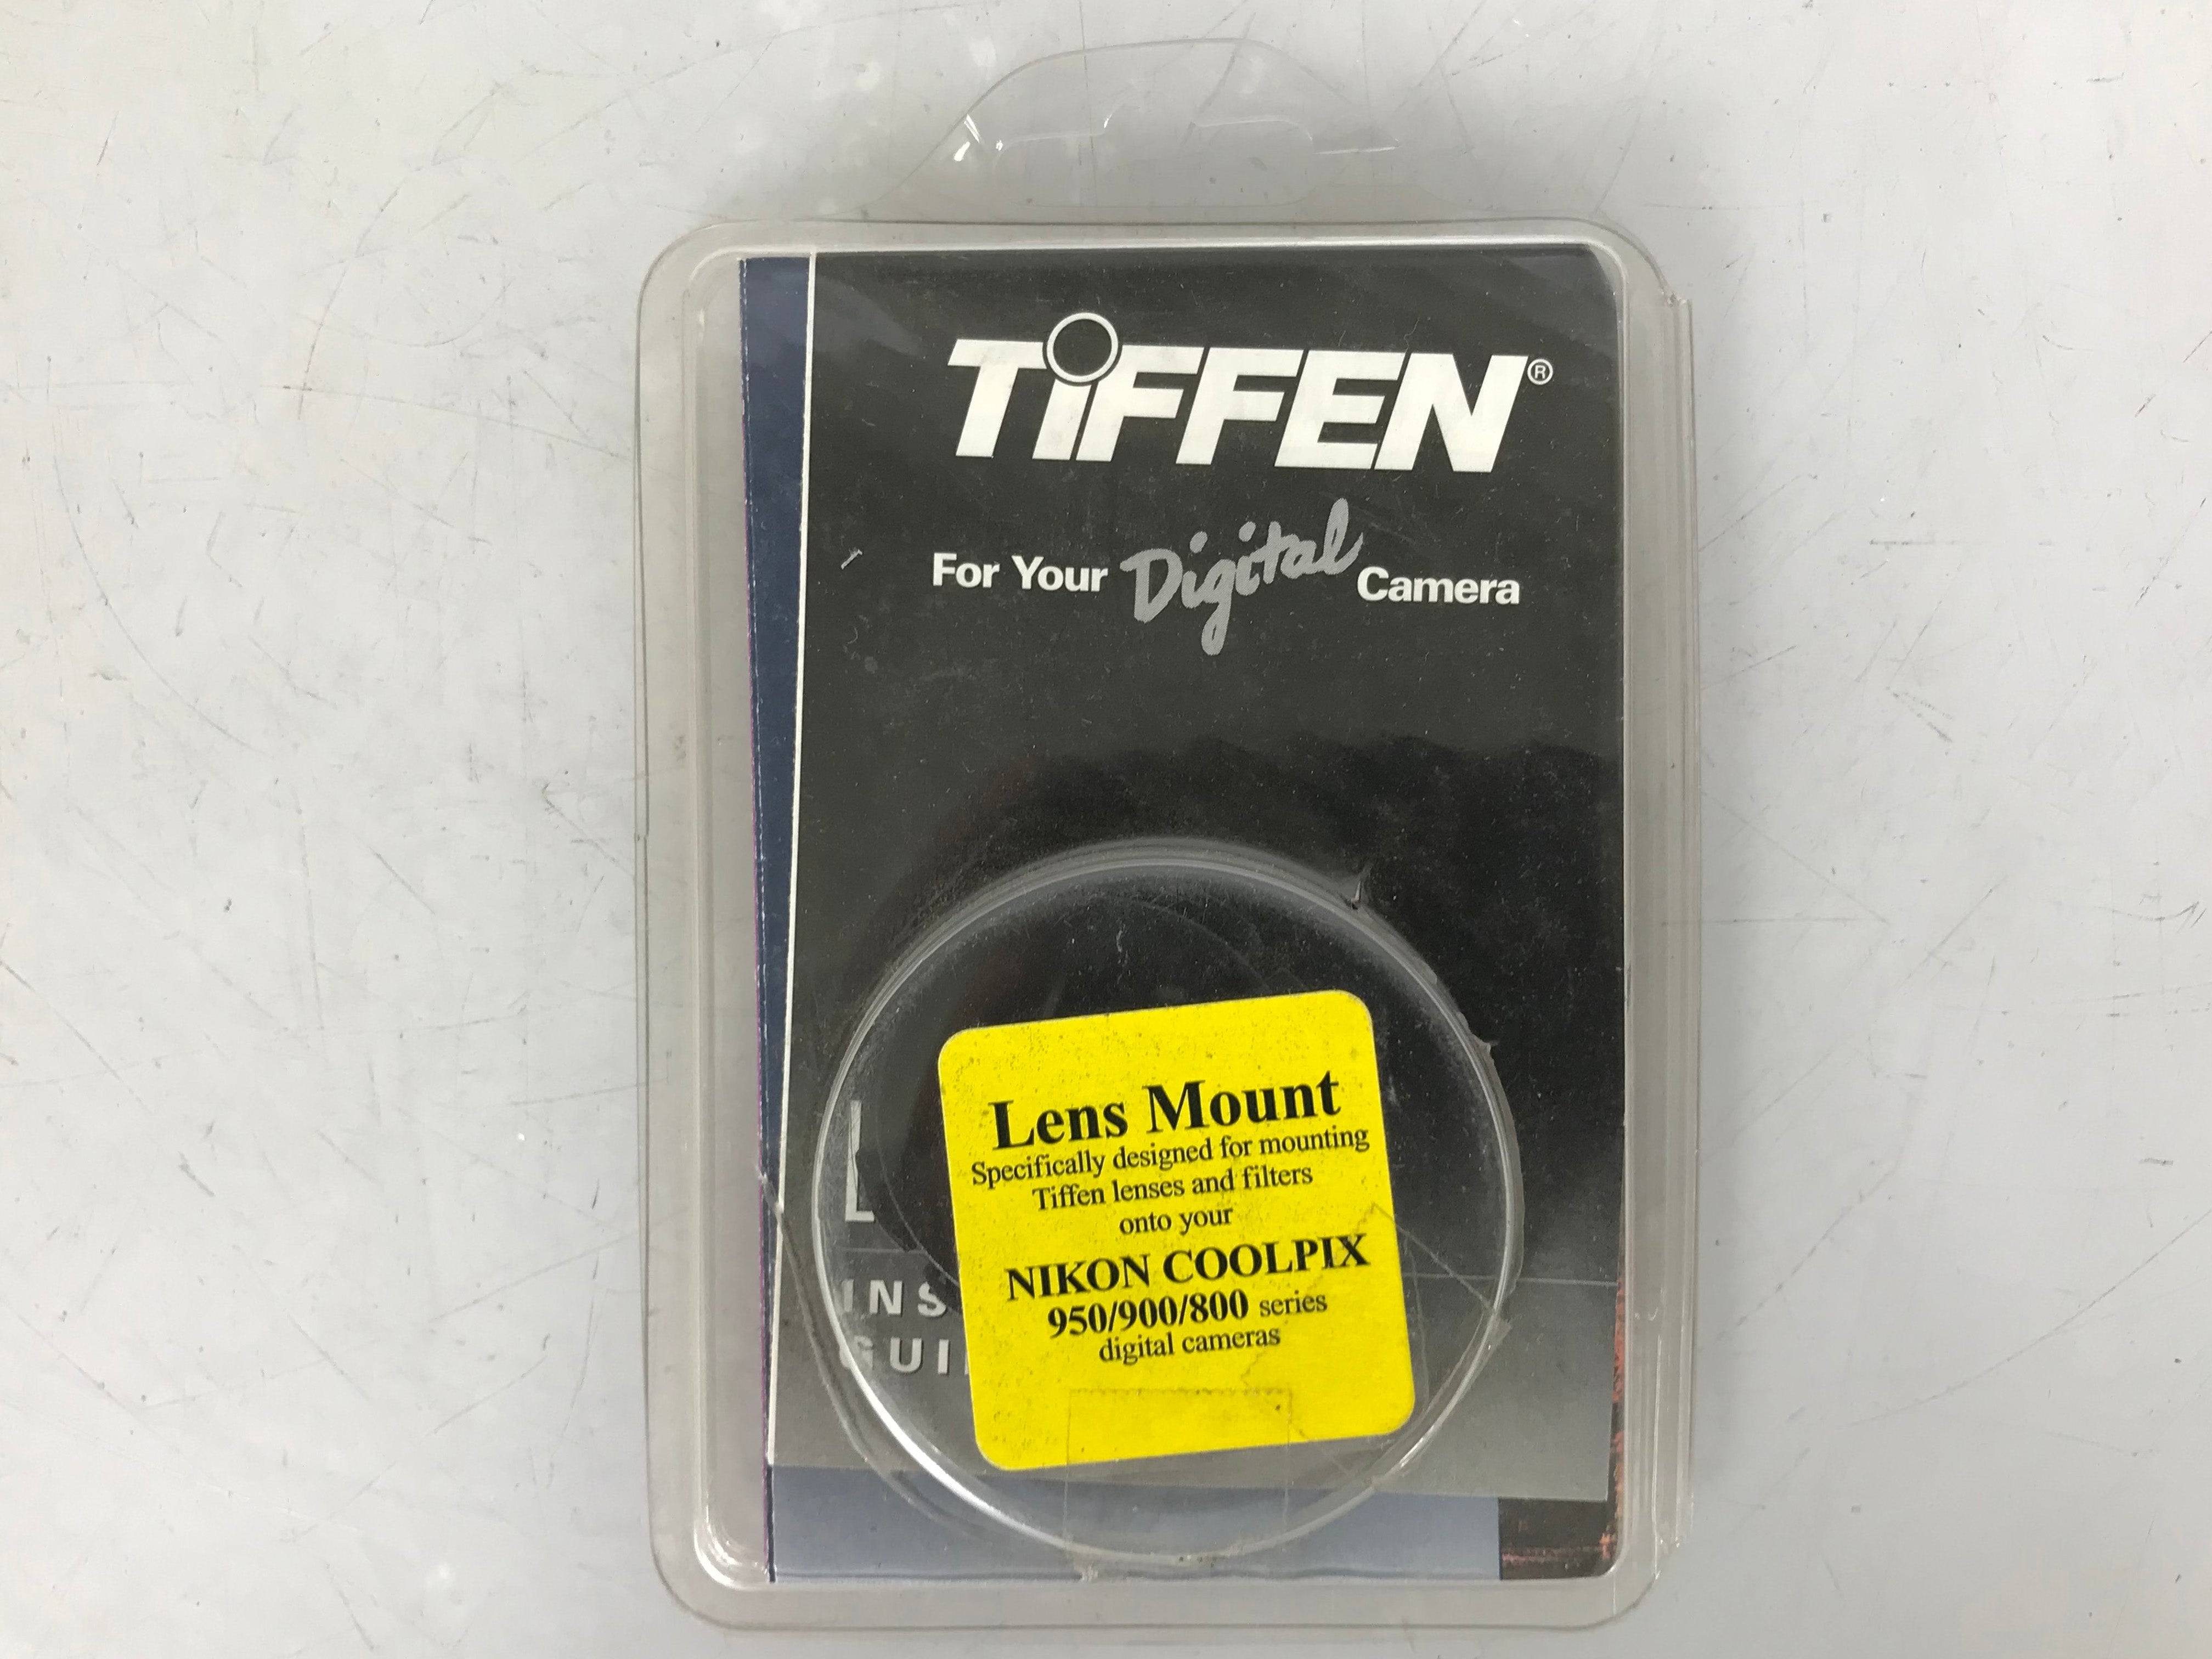 Tiffen Lens Mount For Nikon Coolpix 950/900/800